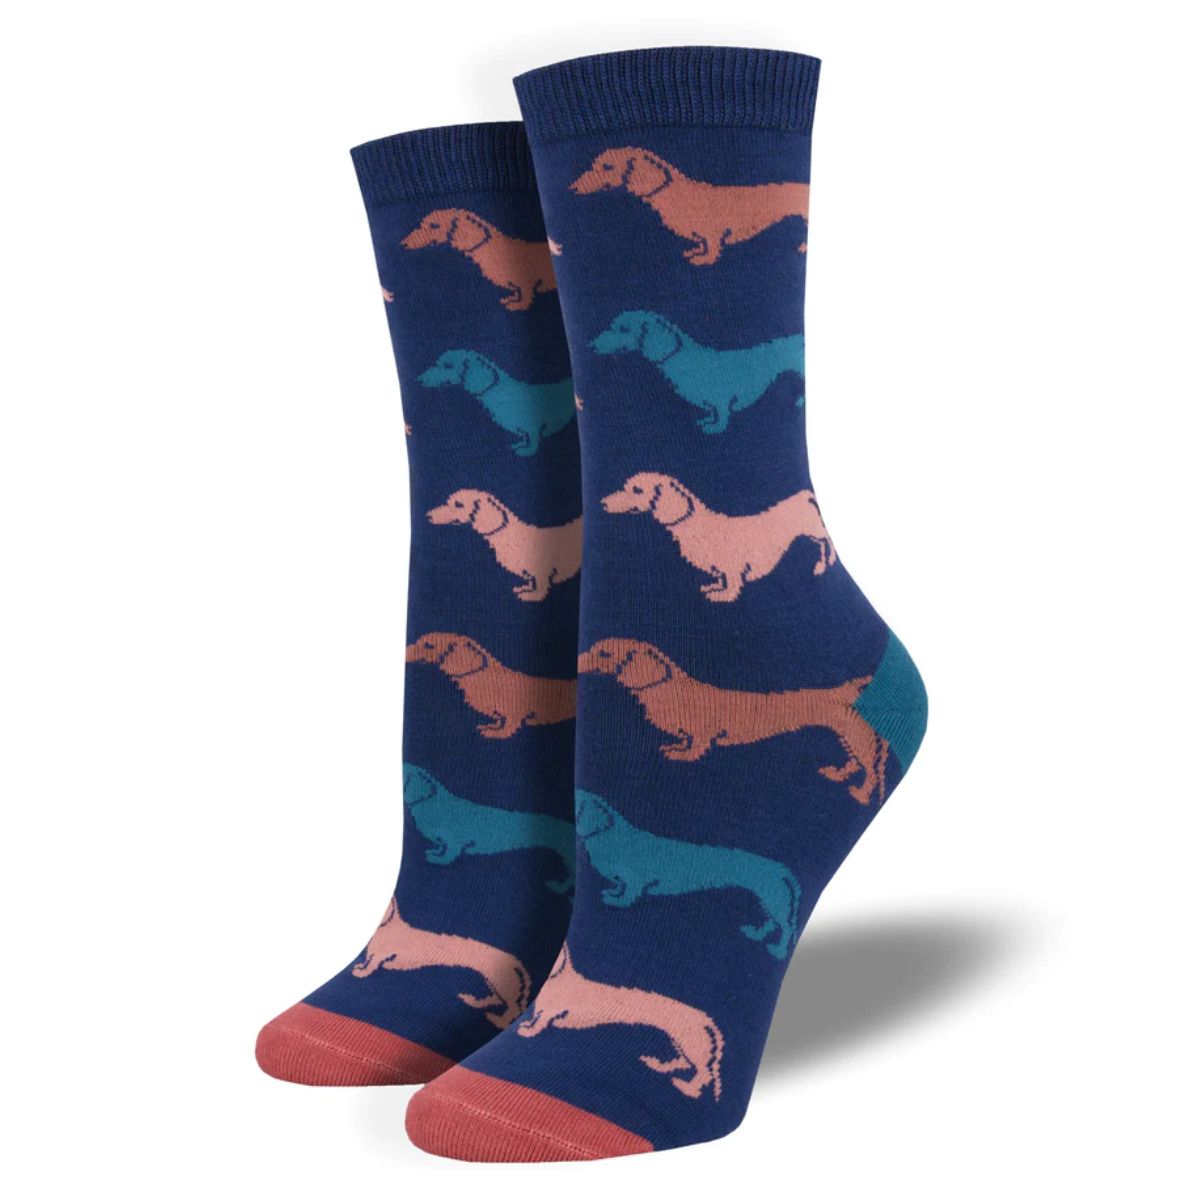 Dachshund socks a pair of blue crew socks with pink and blue dachshund dog print